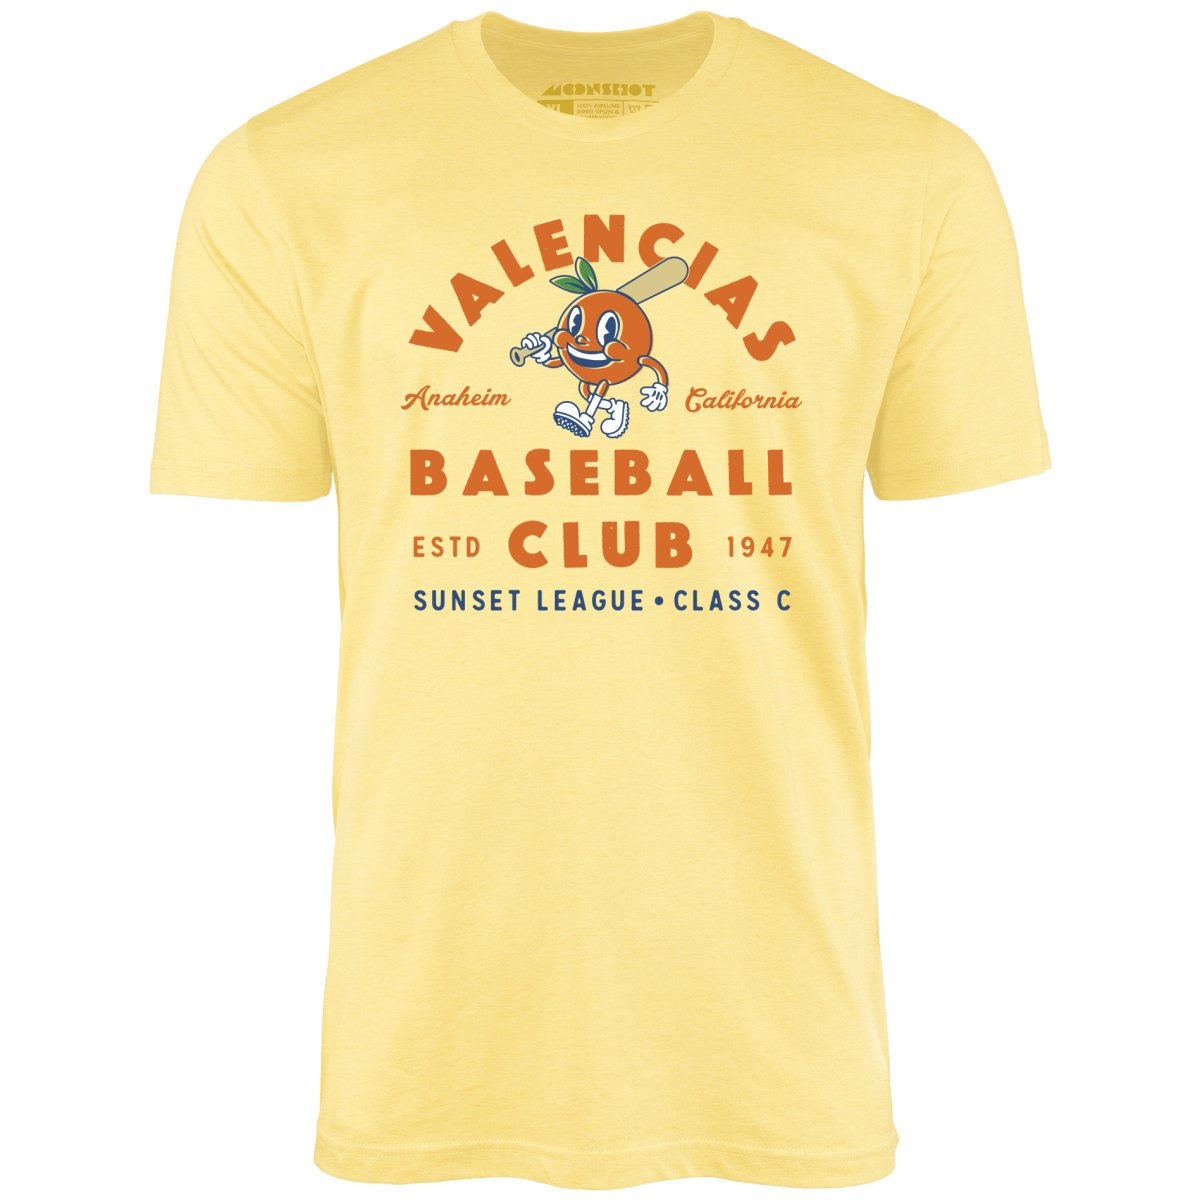 Anaheim Valencias - California - Vintage Defunct Baseball Teams - Unisex T-Shirt